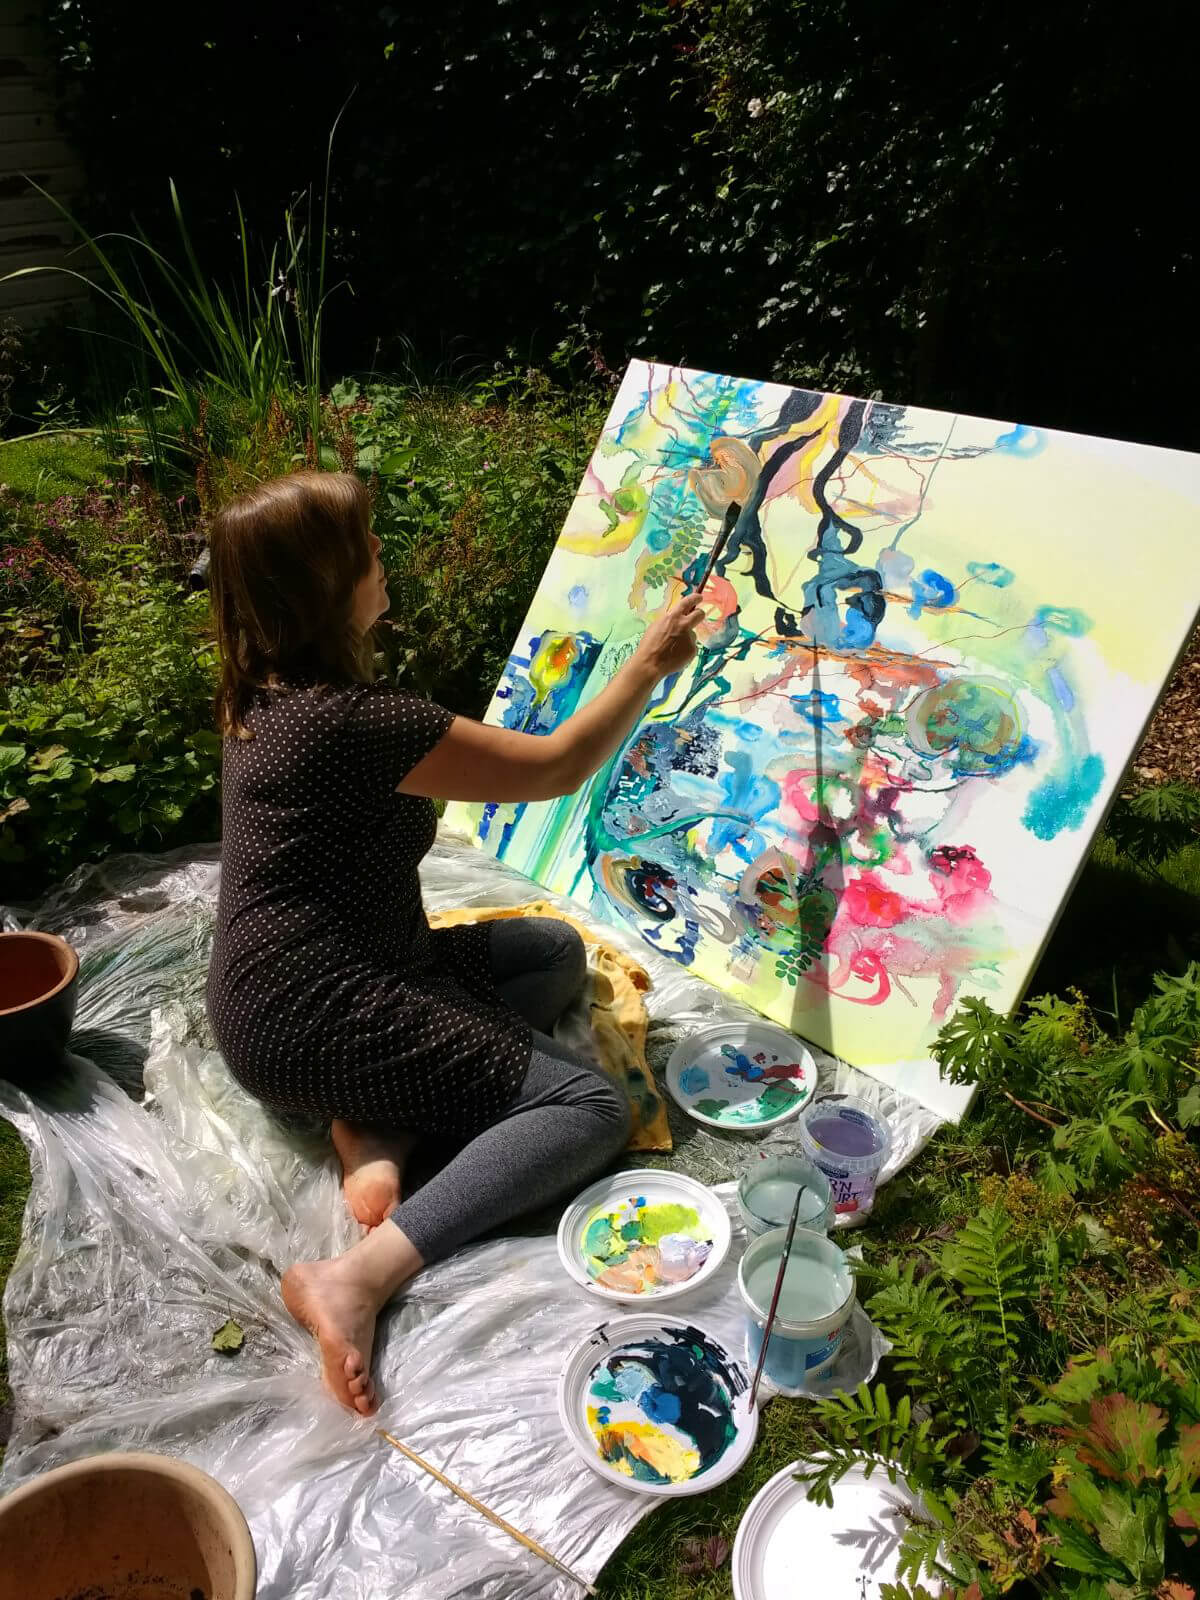 Geazwart ponds pond enpleinair pantarhei painting canvas painting pleinair groningen garden